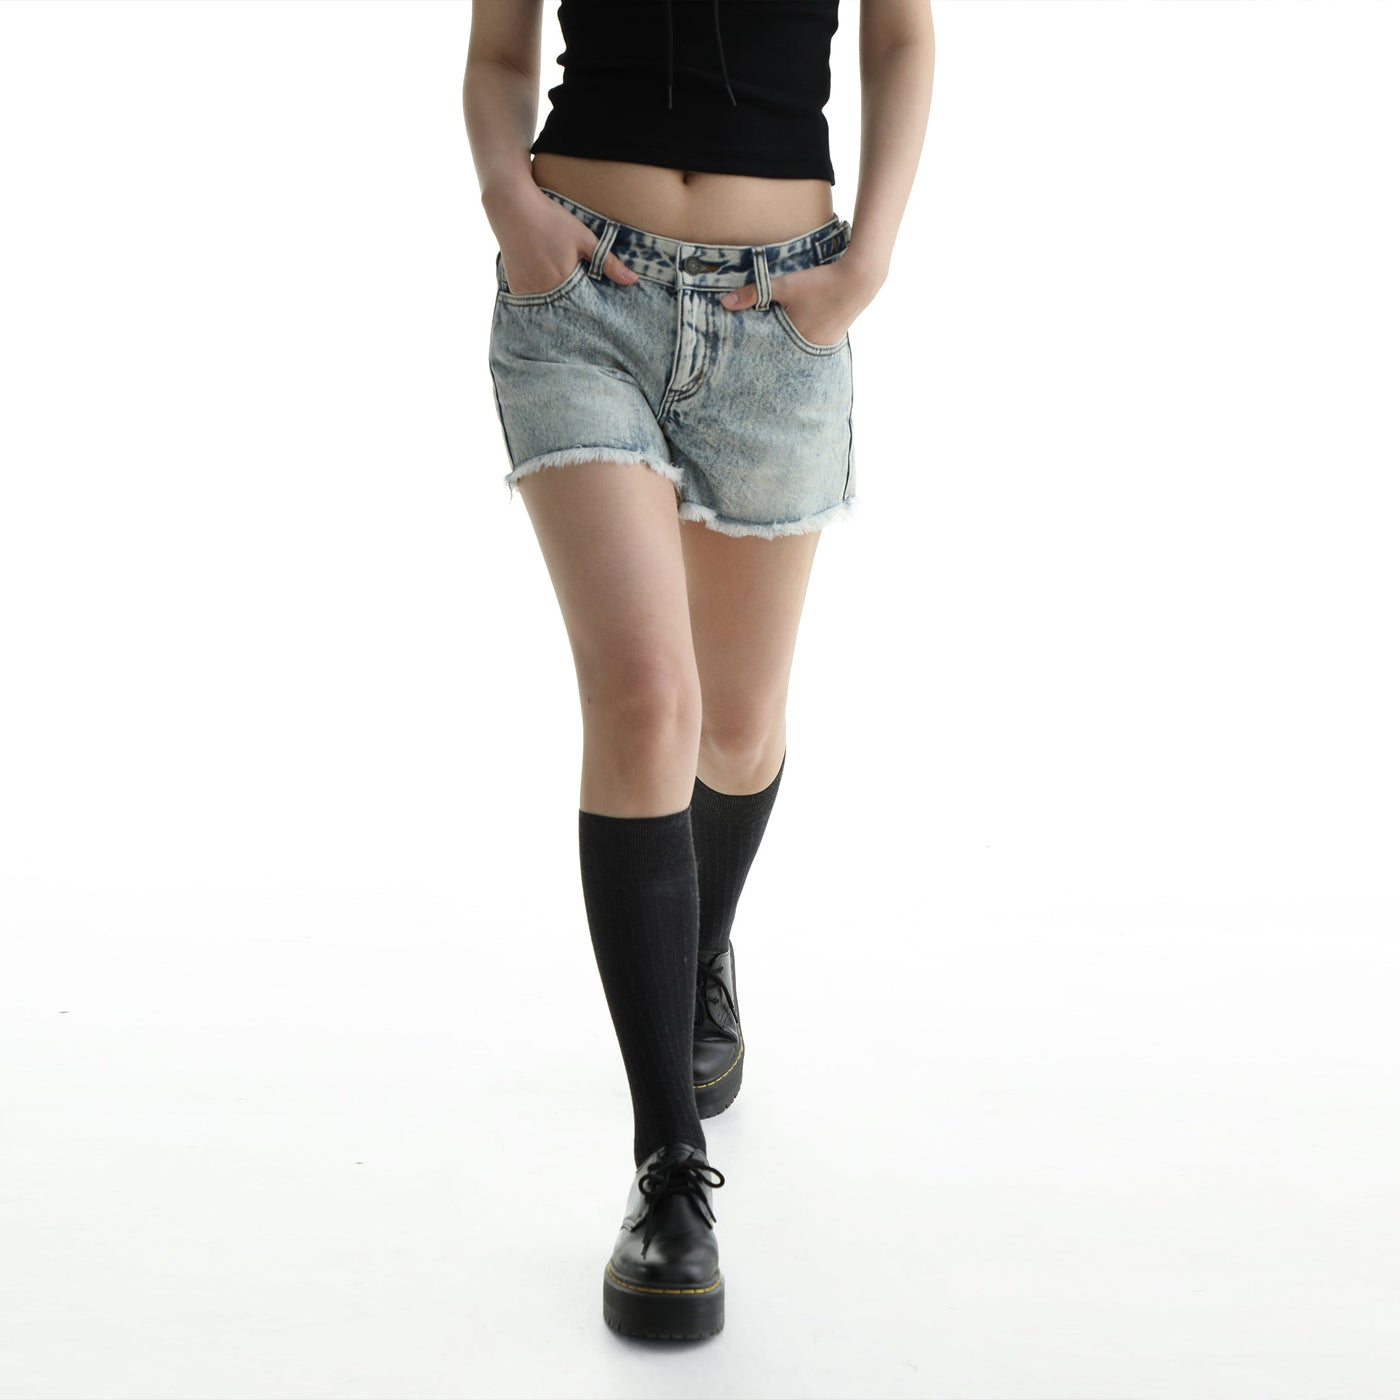 Mason Prince Faded Raw Edge Denim Shorts & Jeans Set Korean Street Fashion Clothing Set By Mason Prince Shop Online at OH Vault